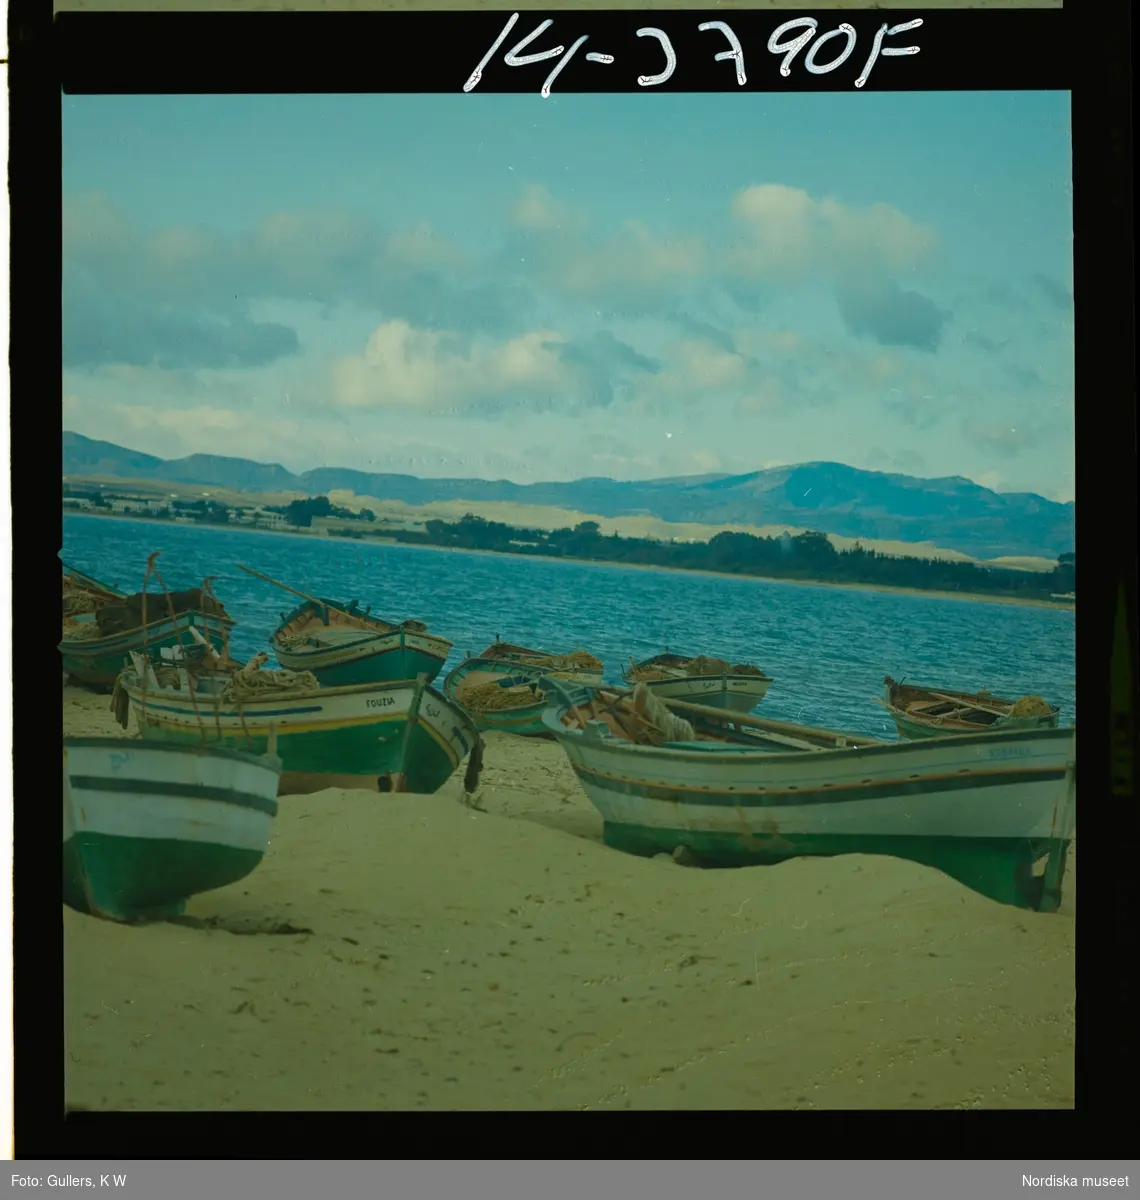 2791 Tunisien Kartago. Målade båtar på strand, vy över bergigt landskap.